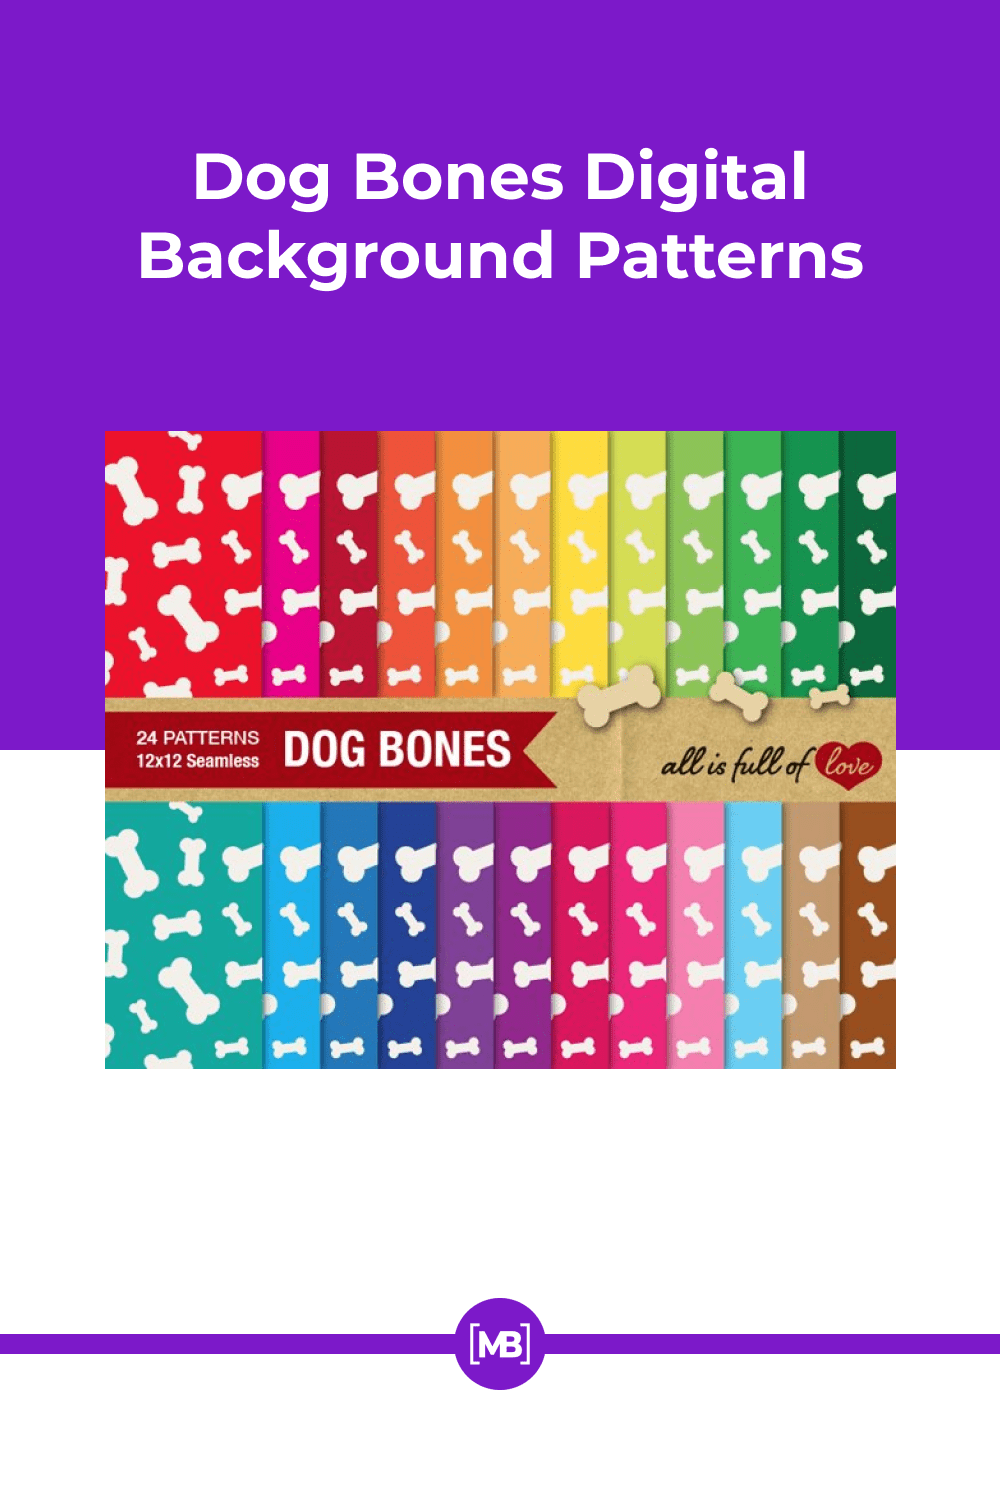 Multicolored dog bones.